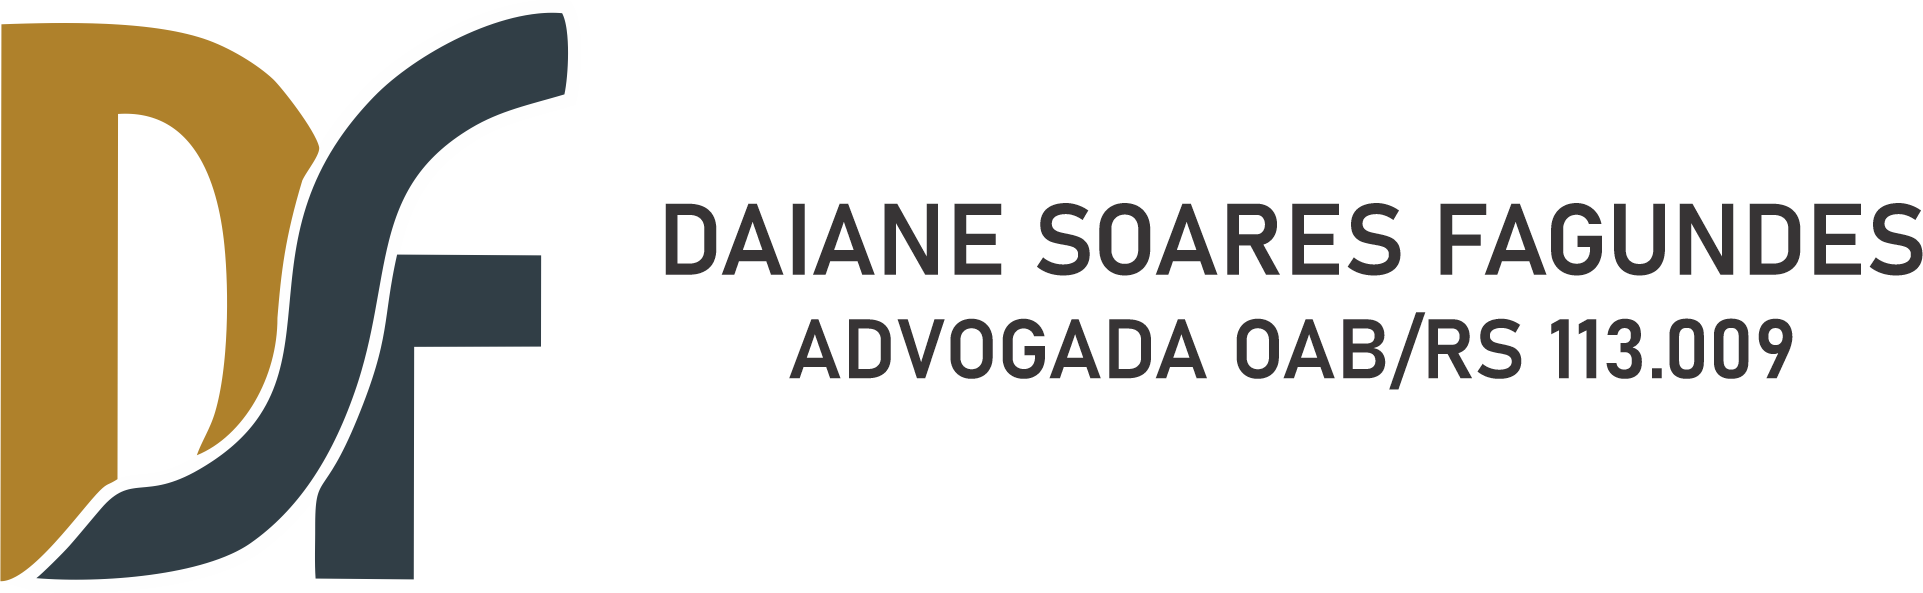 Daiane Fagundes